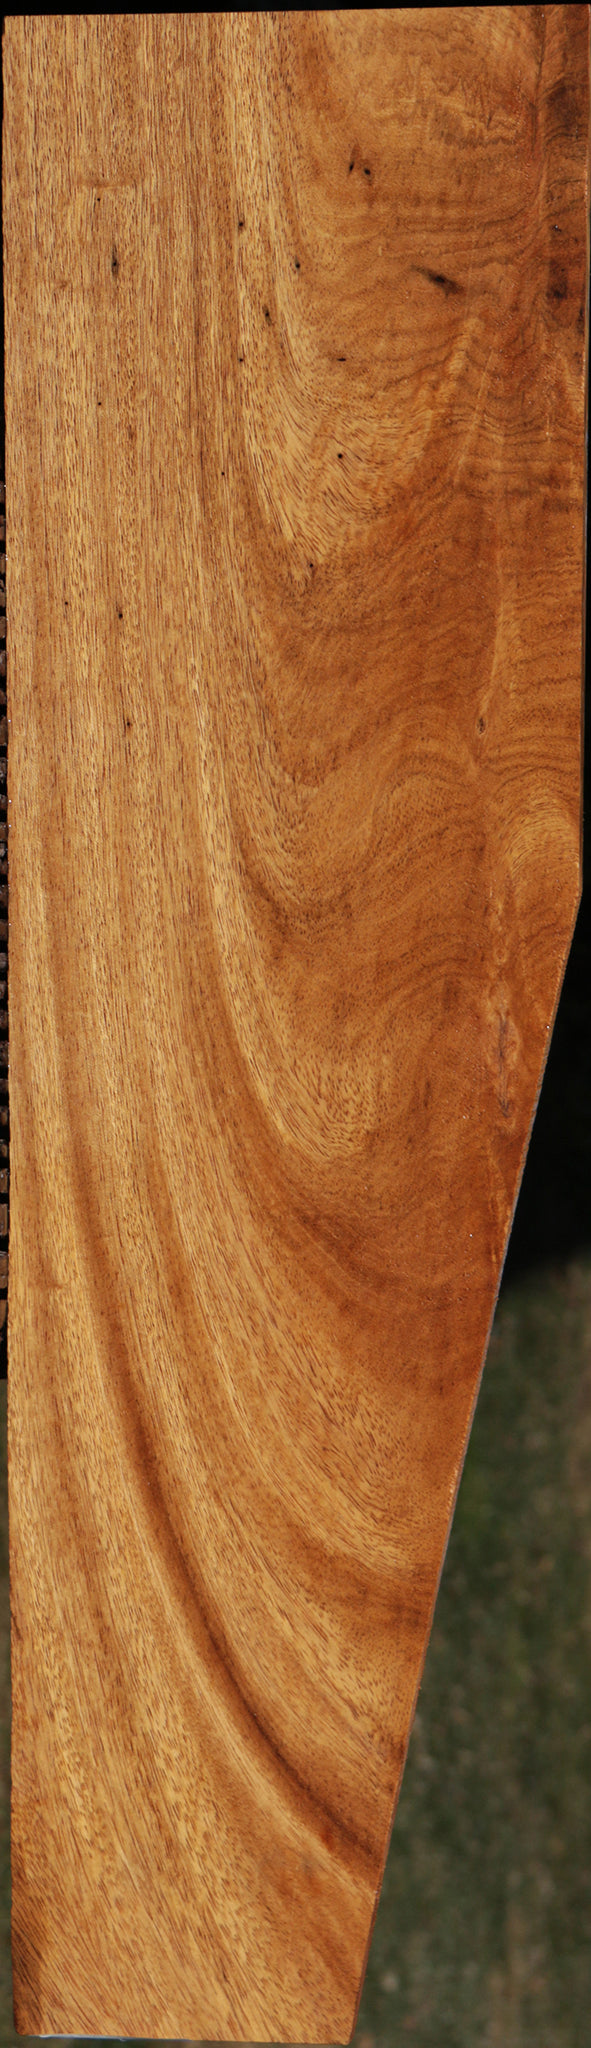 Figured Crotchwood Cerejeira Micro Lumber